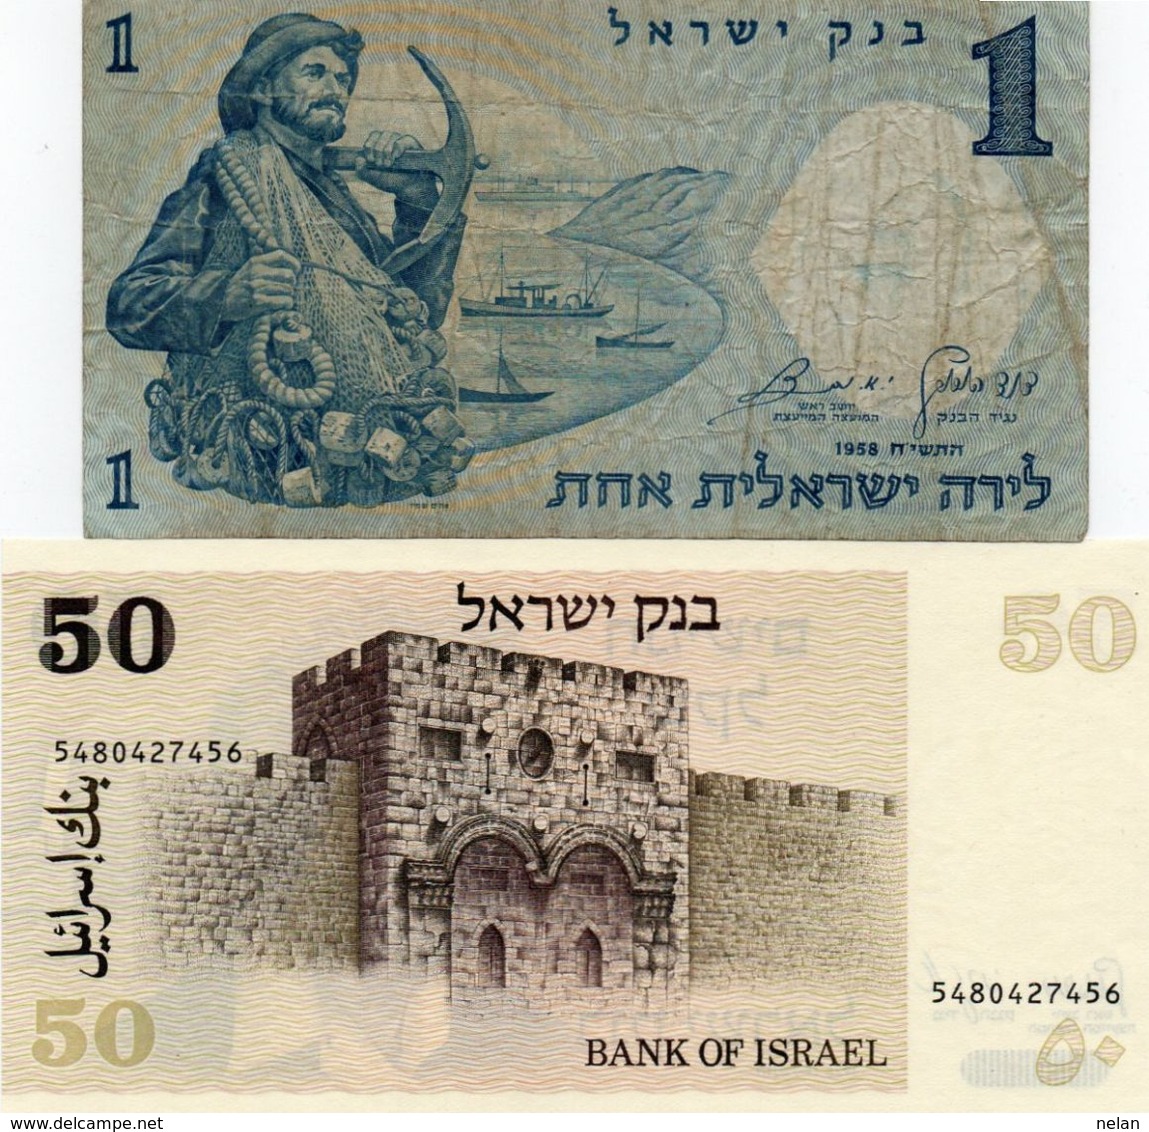 ISRAEL 1 LIRAH  1958  CIRC /50 SHEQALIM 1980 P-46 UNC - Kiloware - Banknoten